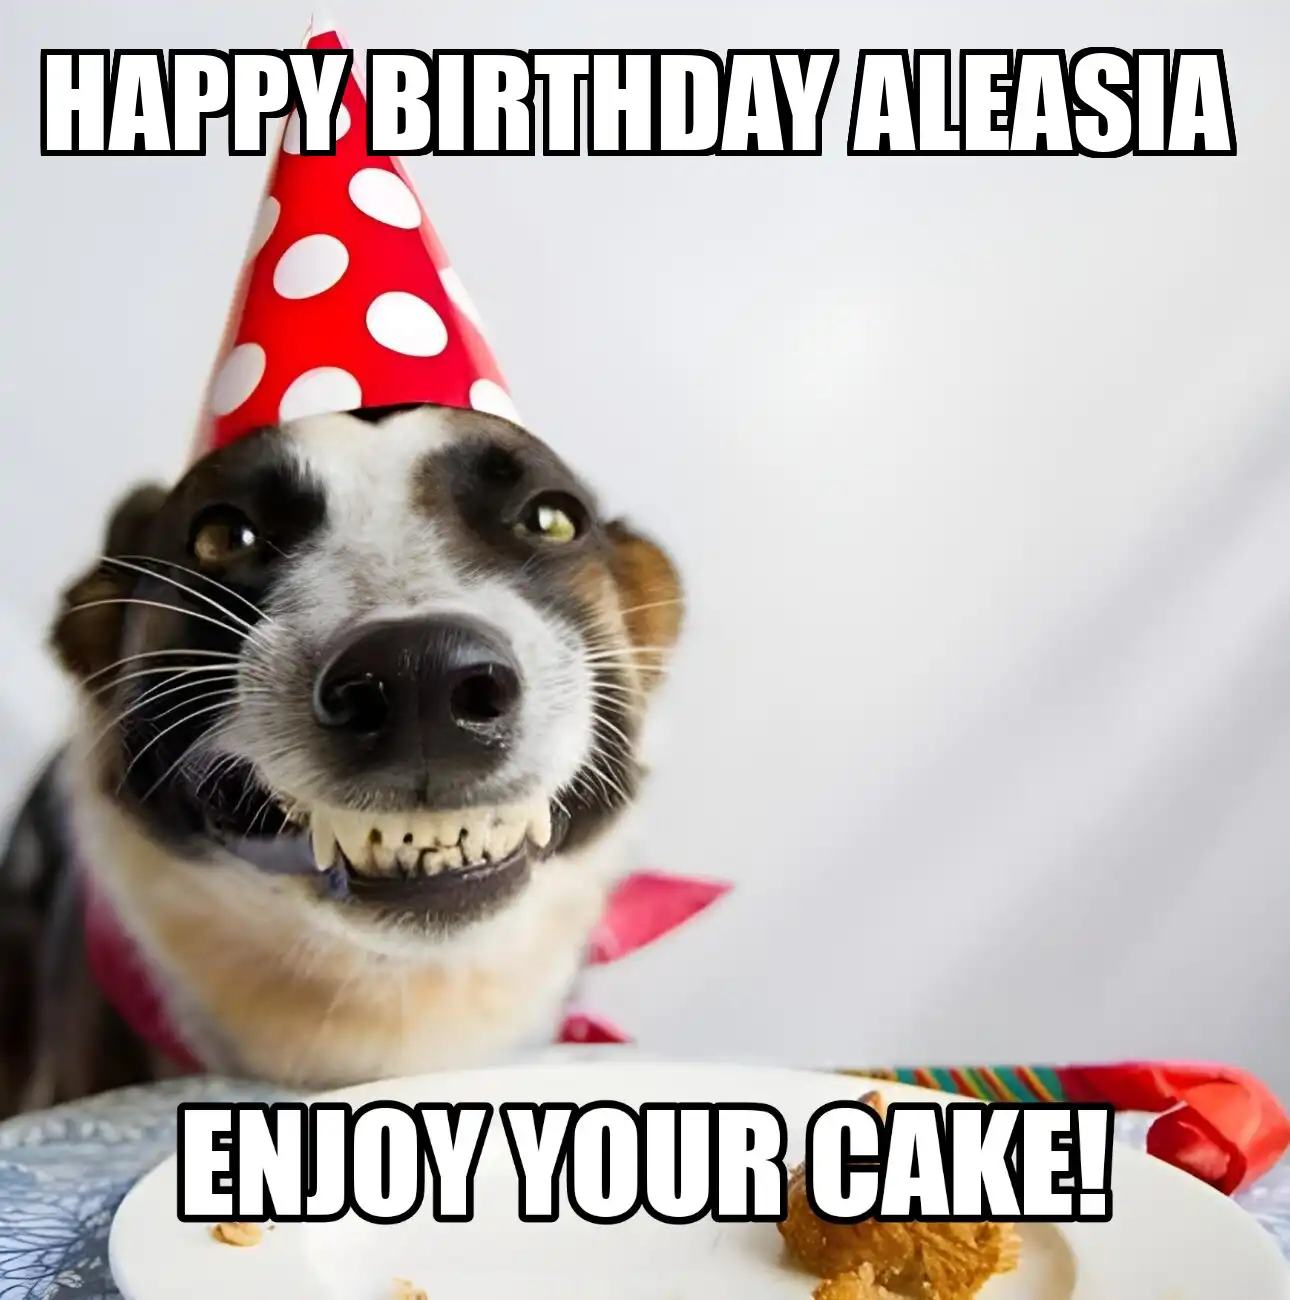 Happy Birthday Aleasia Enjoy Your Cake Dog Meme